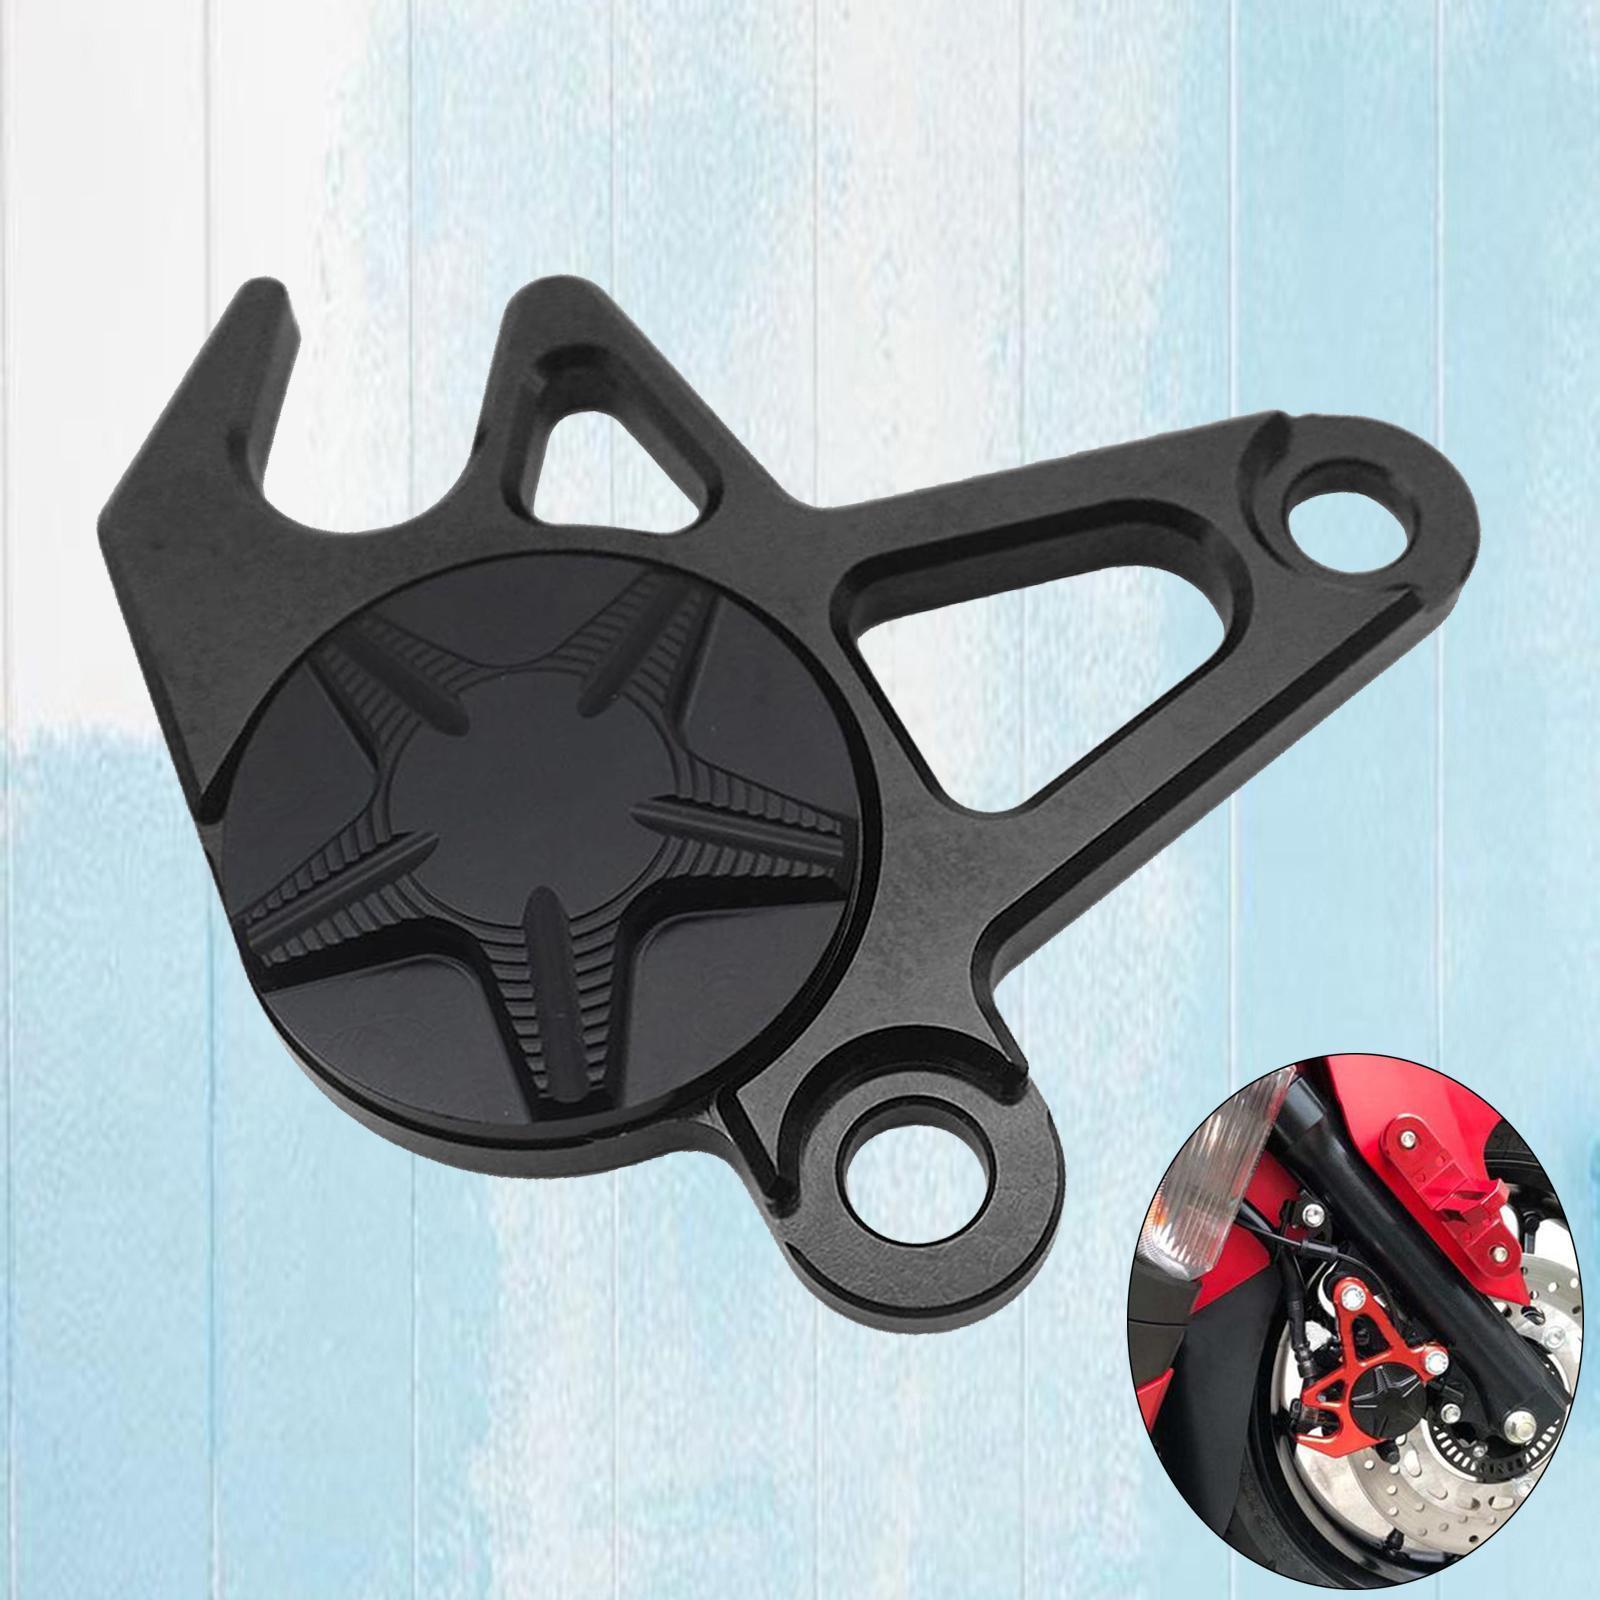 Motorcycle Rear Brake Pump Cover Cap Protector for Yamaha NMAX155